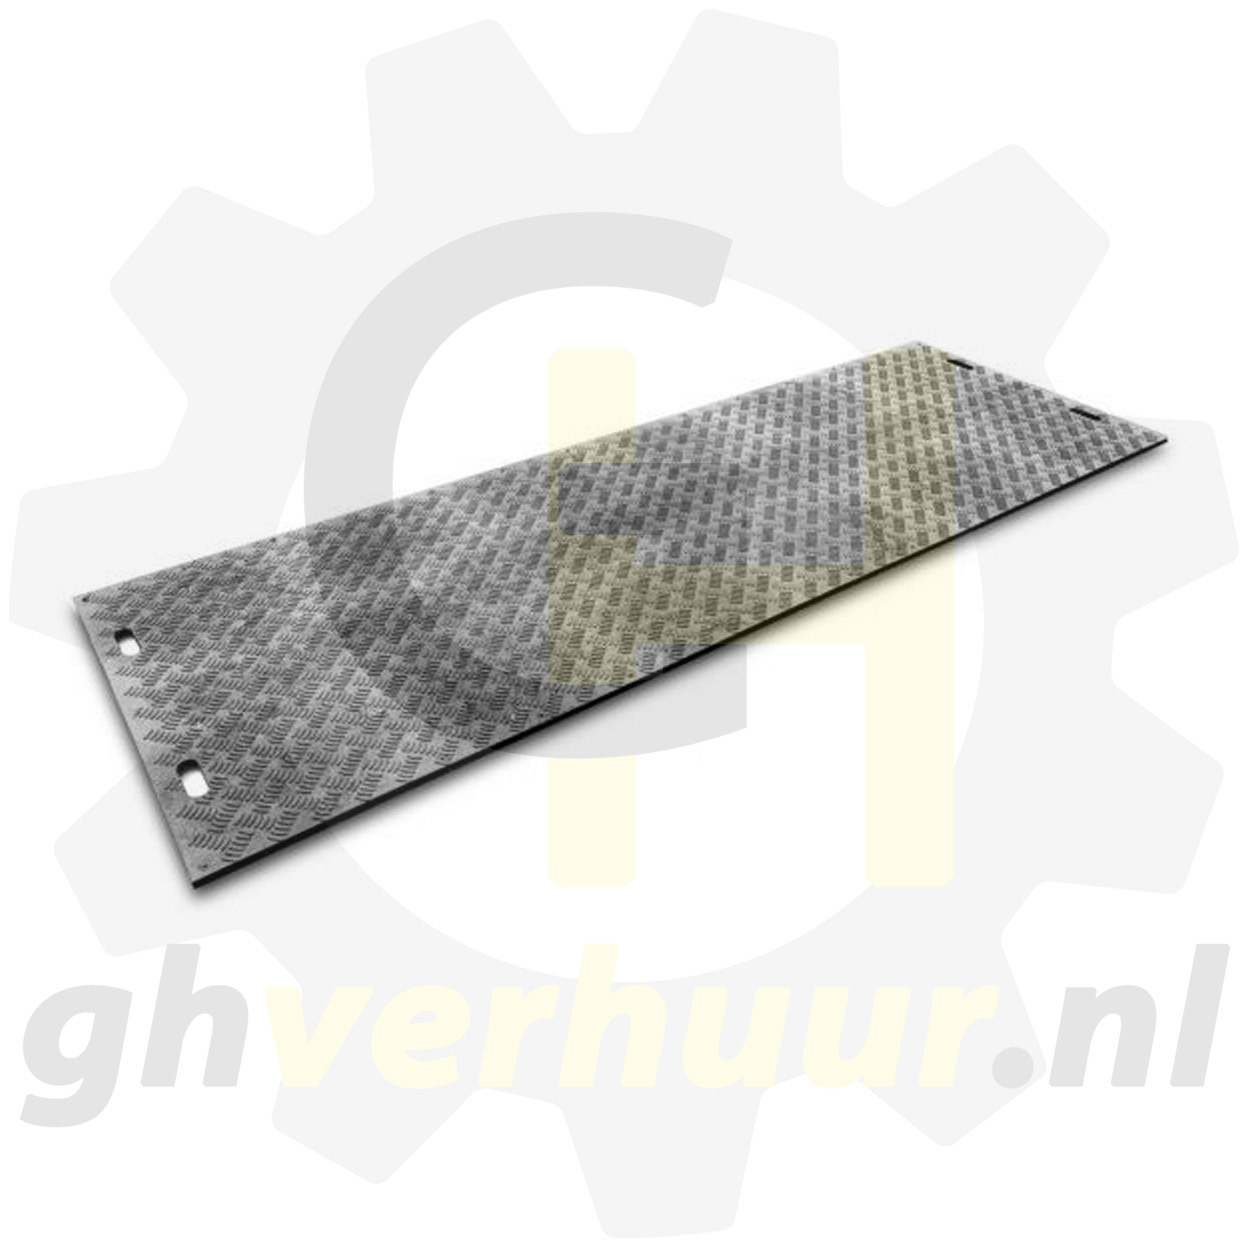 www.ghverhuur.nl ghverhuur gh verhuur rijplaat huren professioneel gereedschap